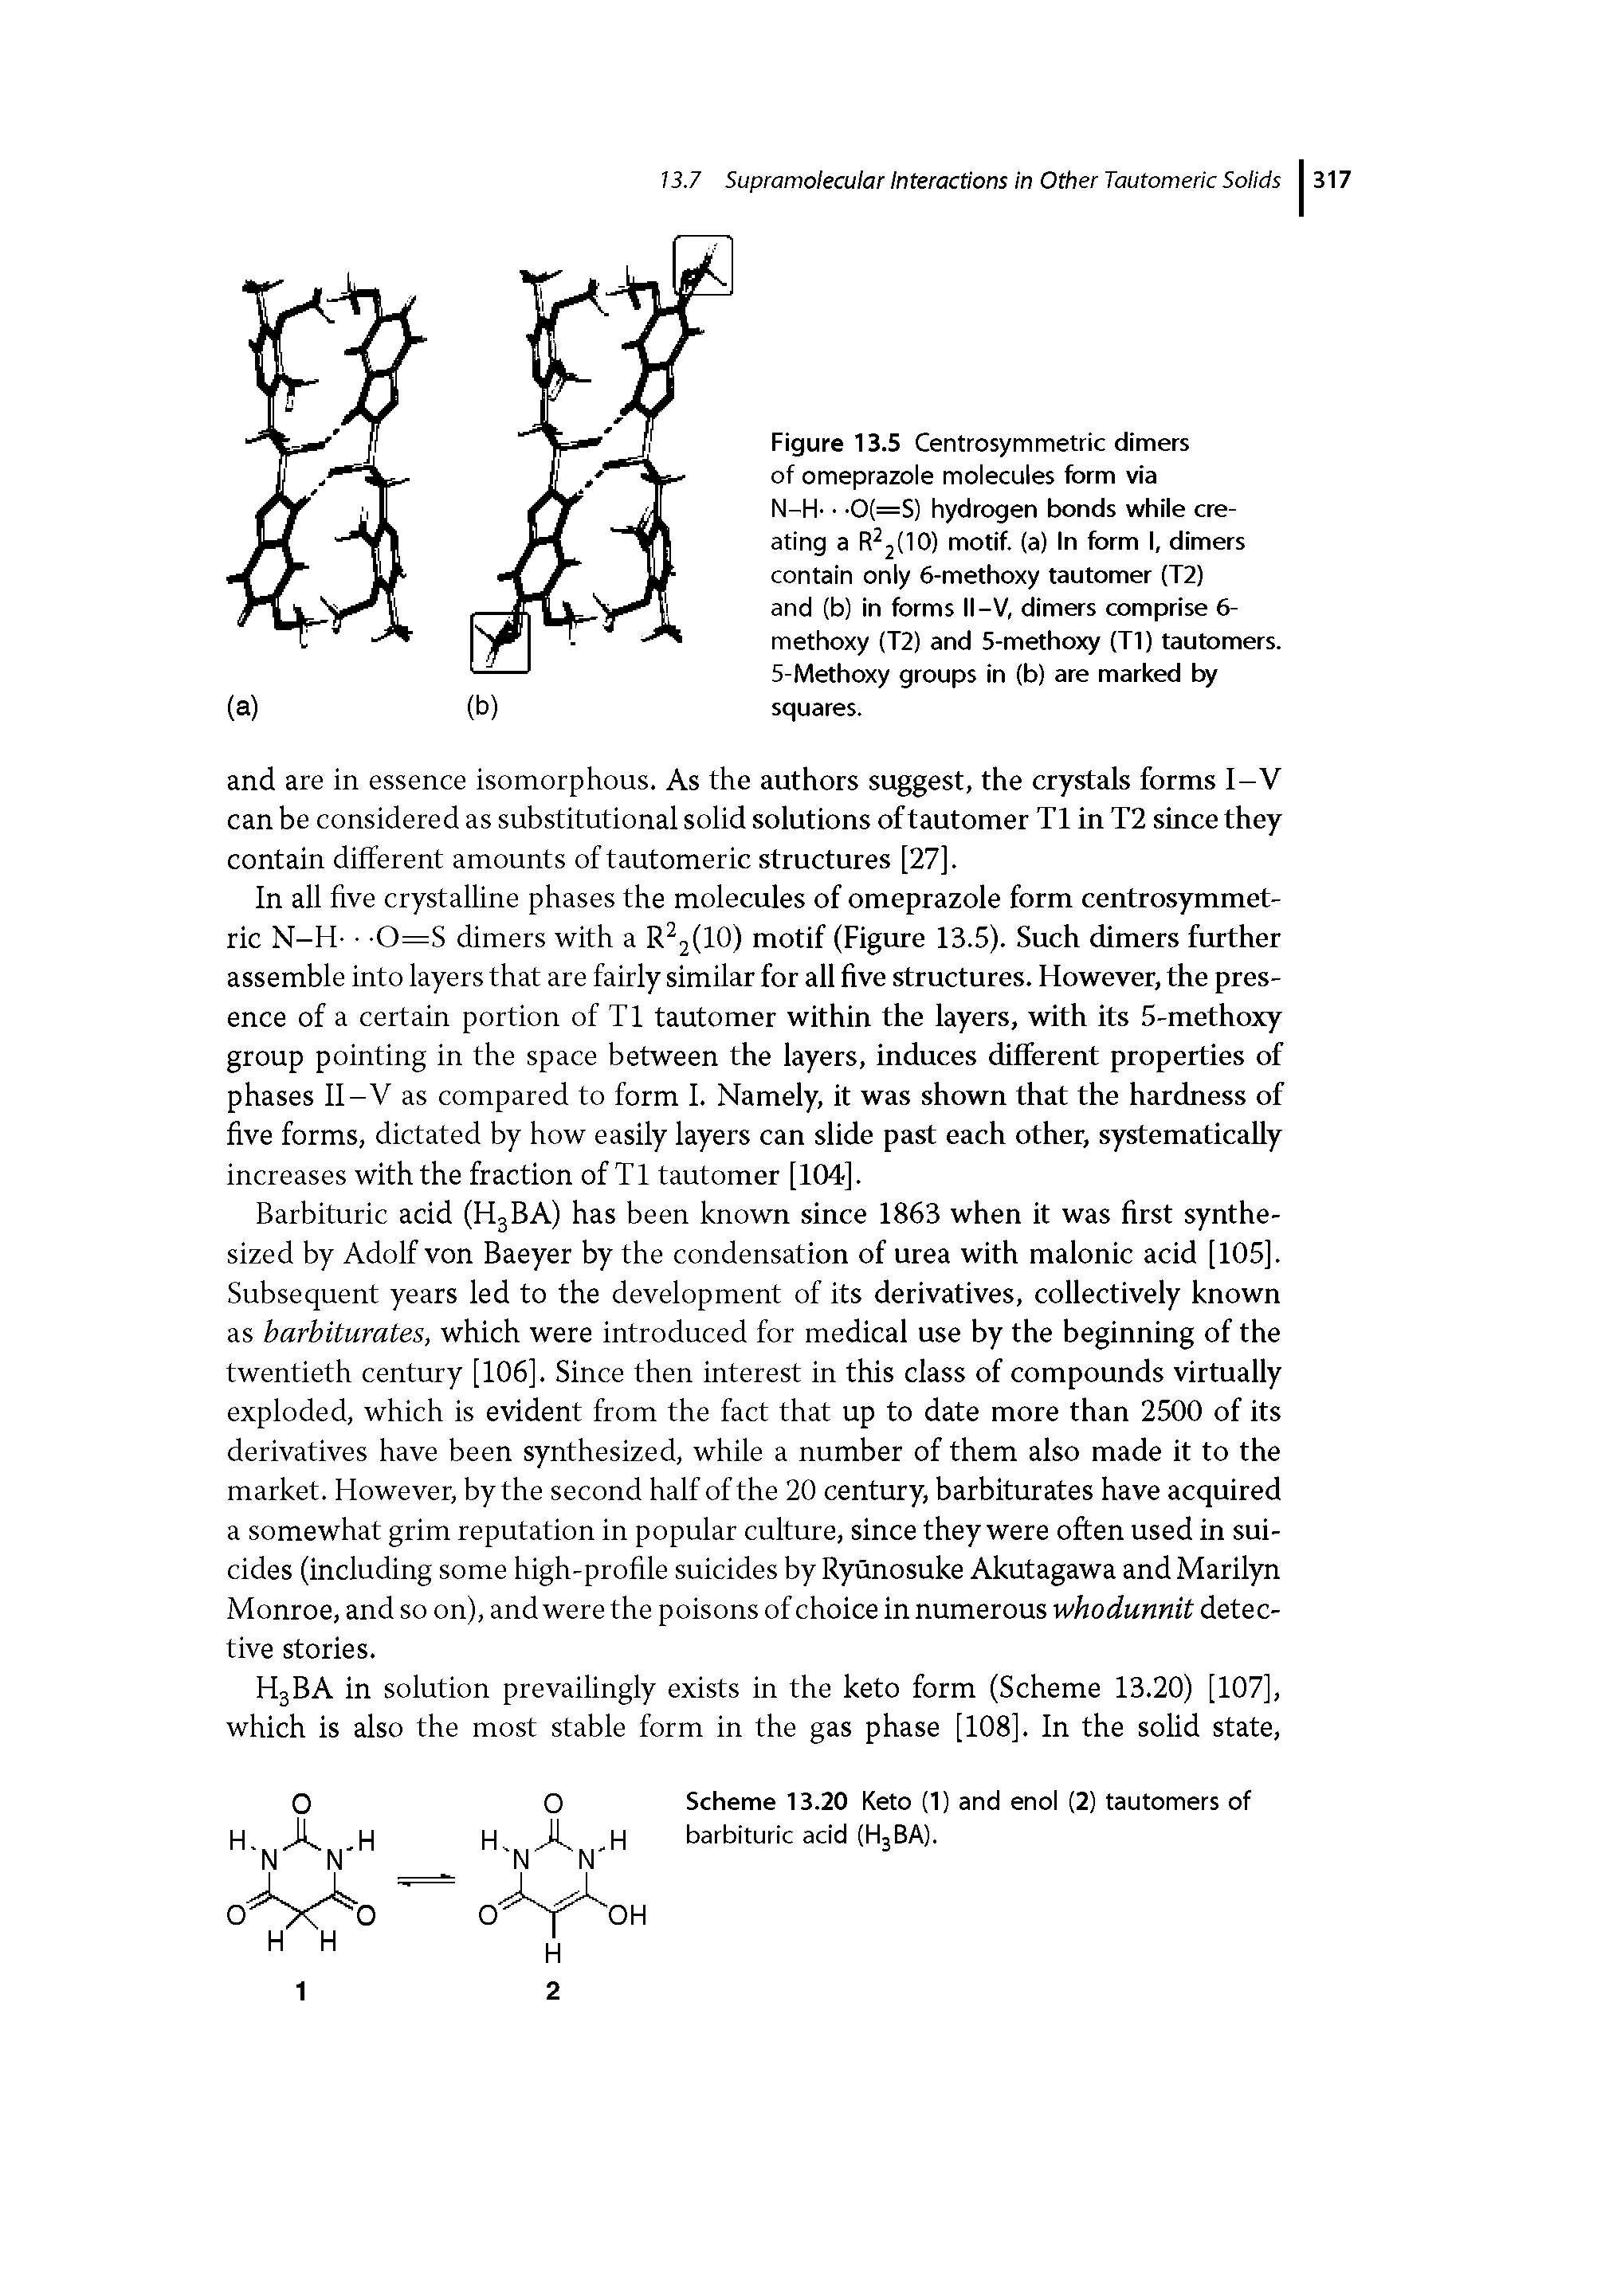 Scheme 13.20 Keto (1) and enol (2) tautomers of barbituric acid (H3BA).